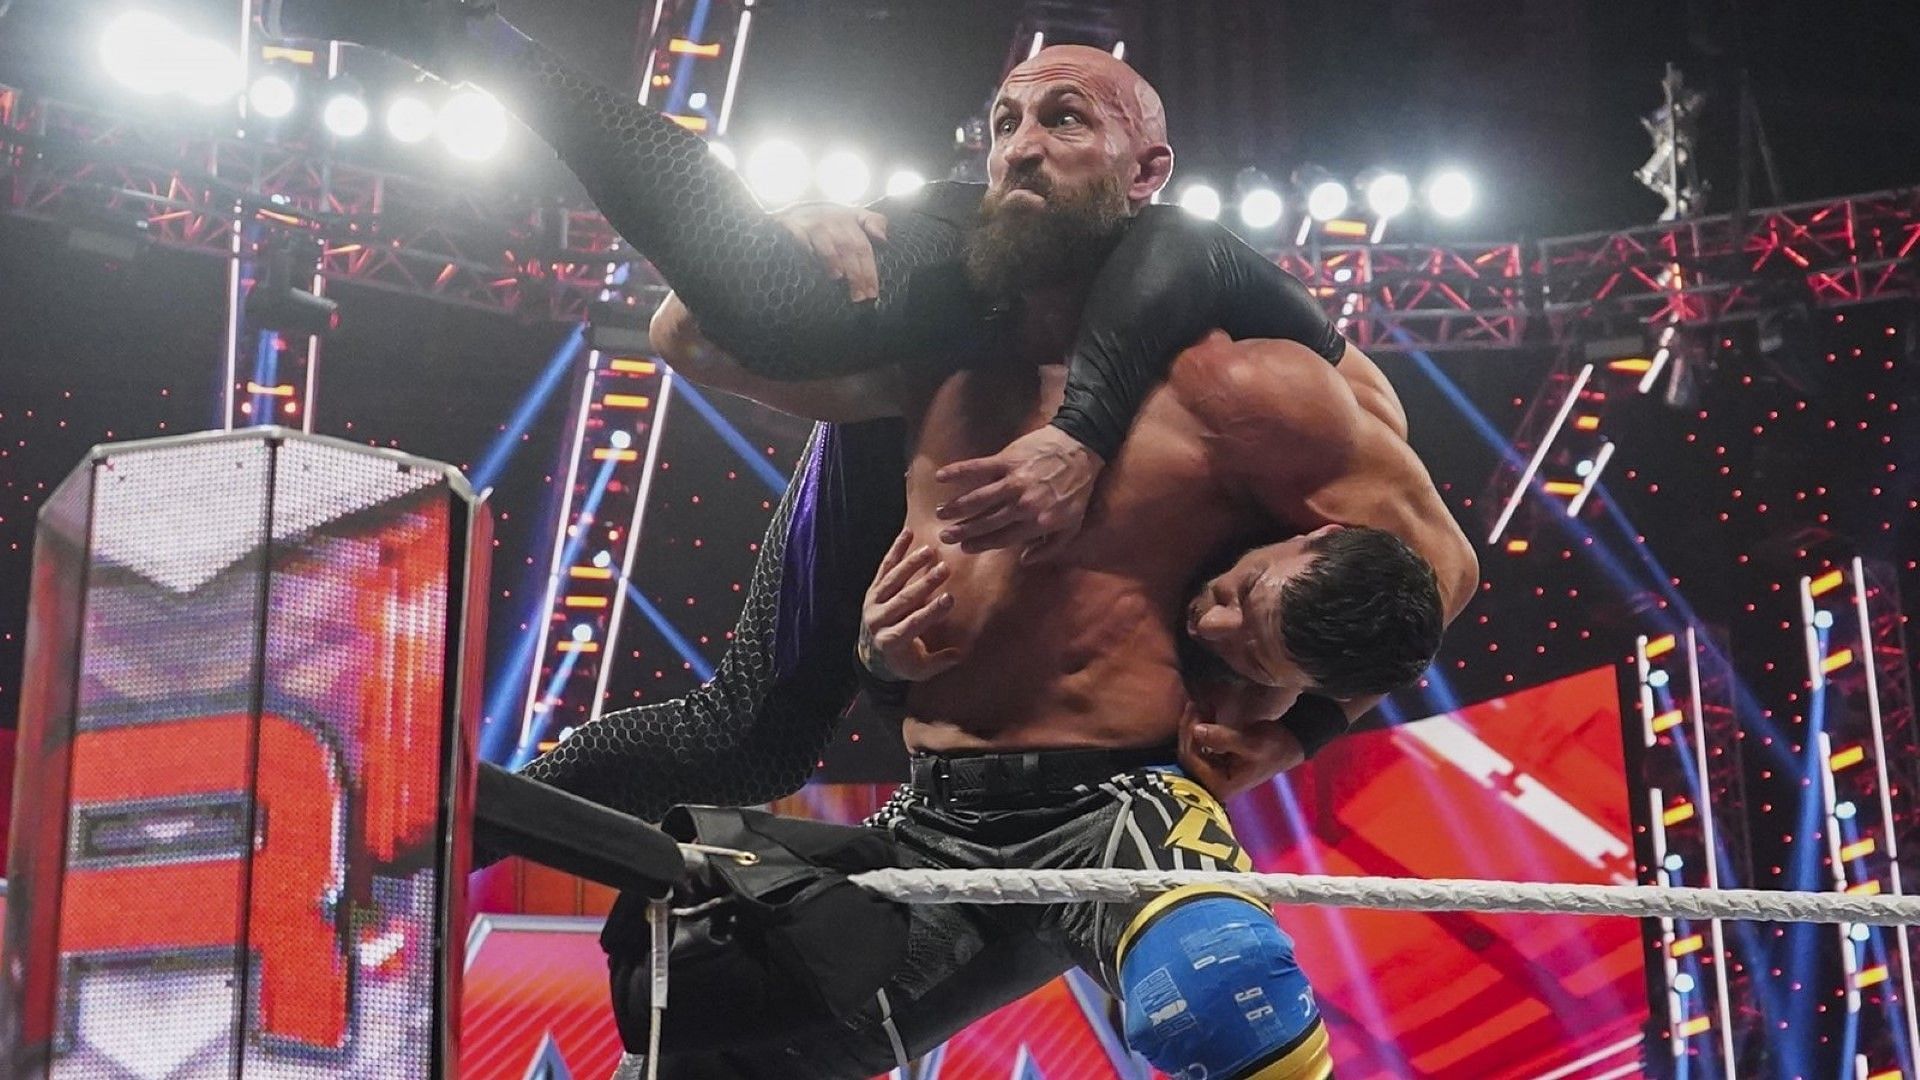 Tommaso Ciampa runs wild in the ring on WWE RAW